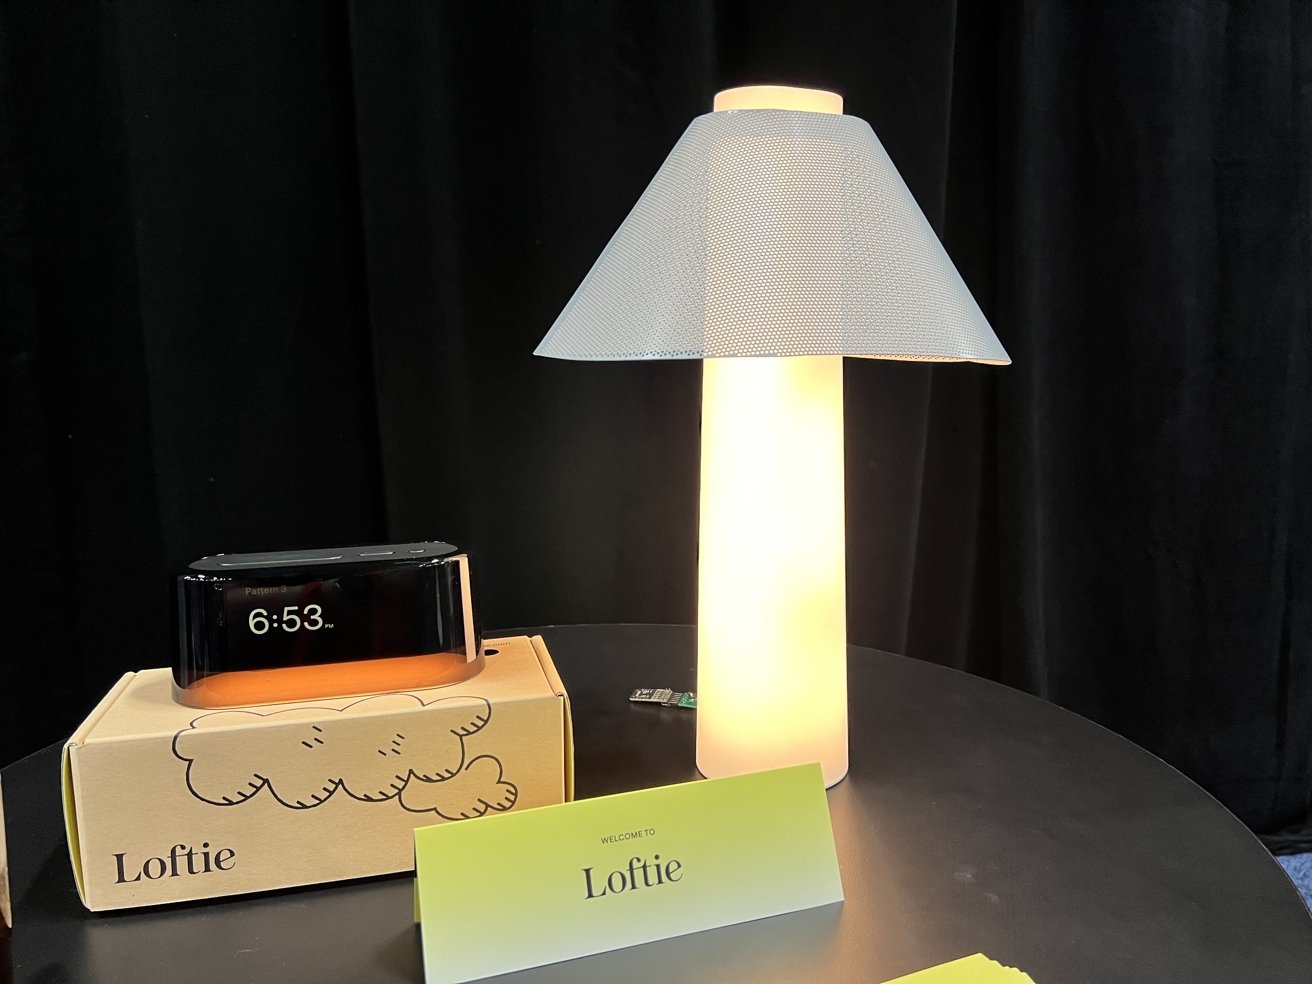 The new Loftie Lamp